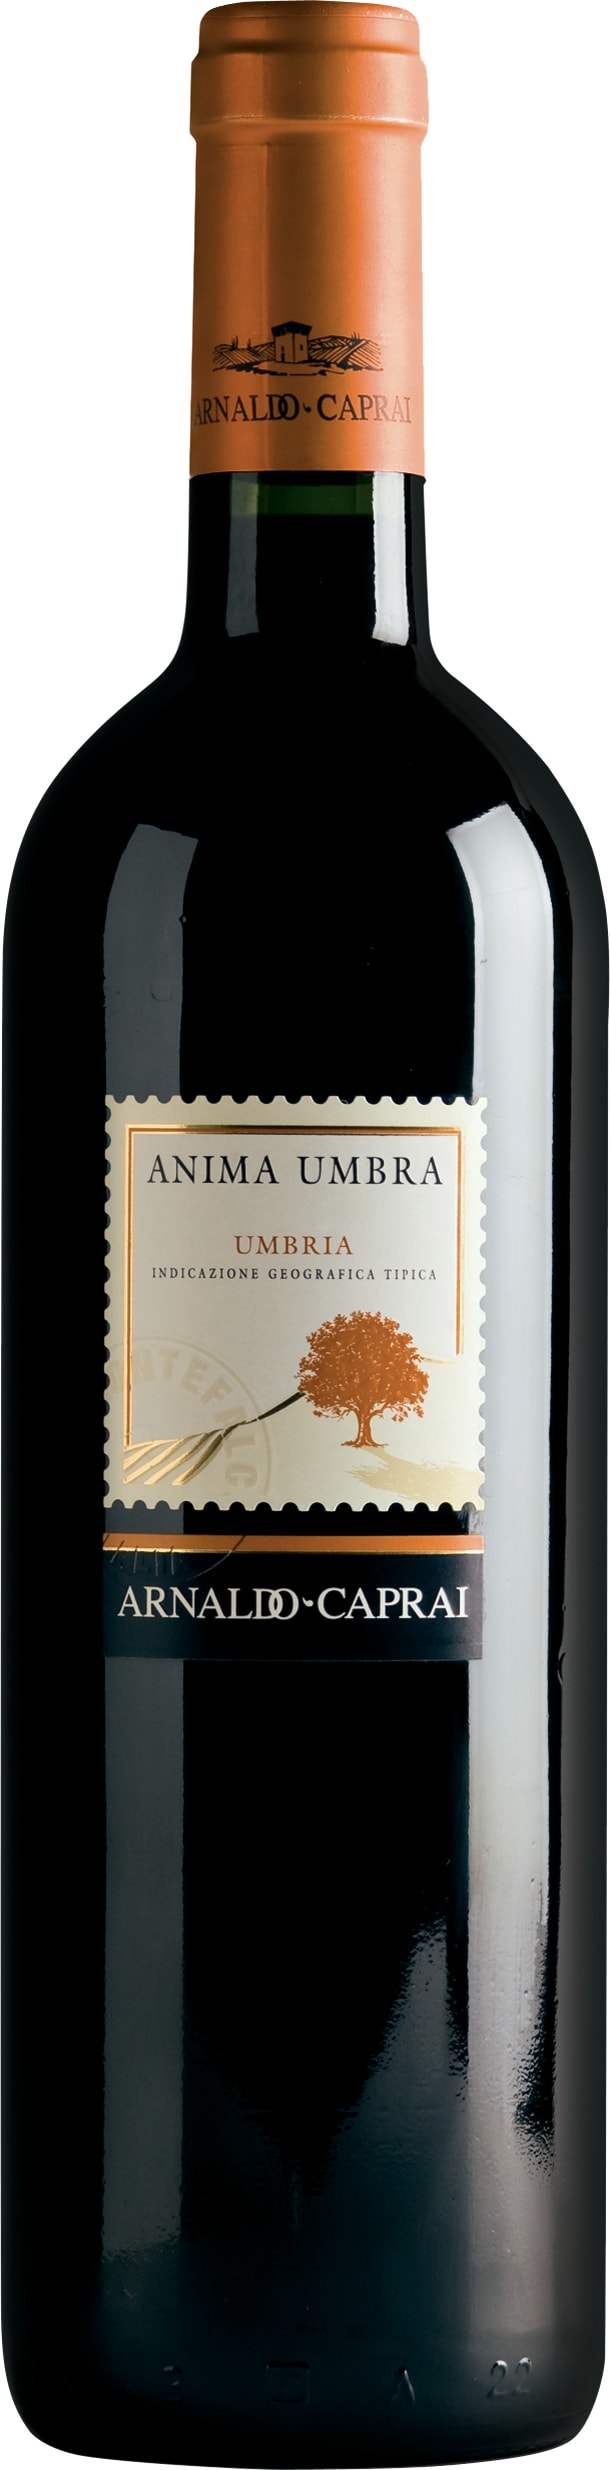 Arnaldo Caprai Anima Umbra Rosso 2019 75cl - Buy Arnaldo Caprai Wines from GREAT WINES DIRECT wine shop